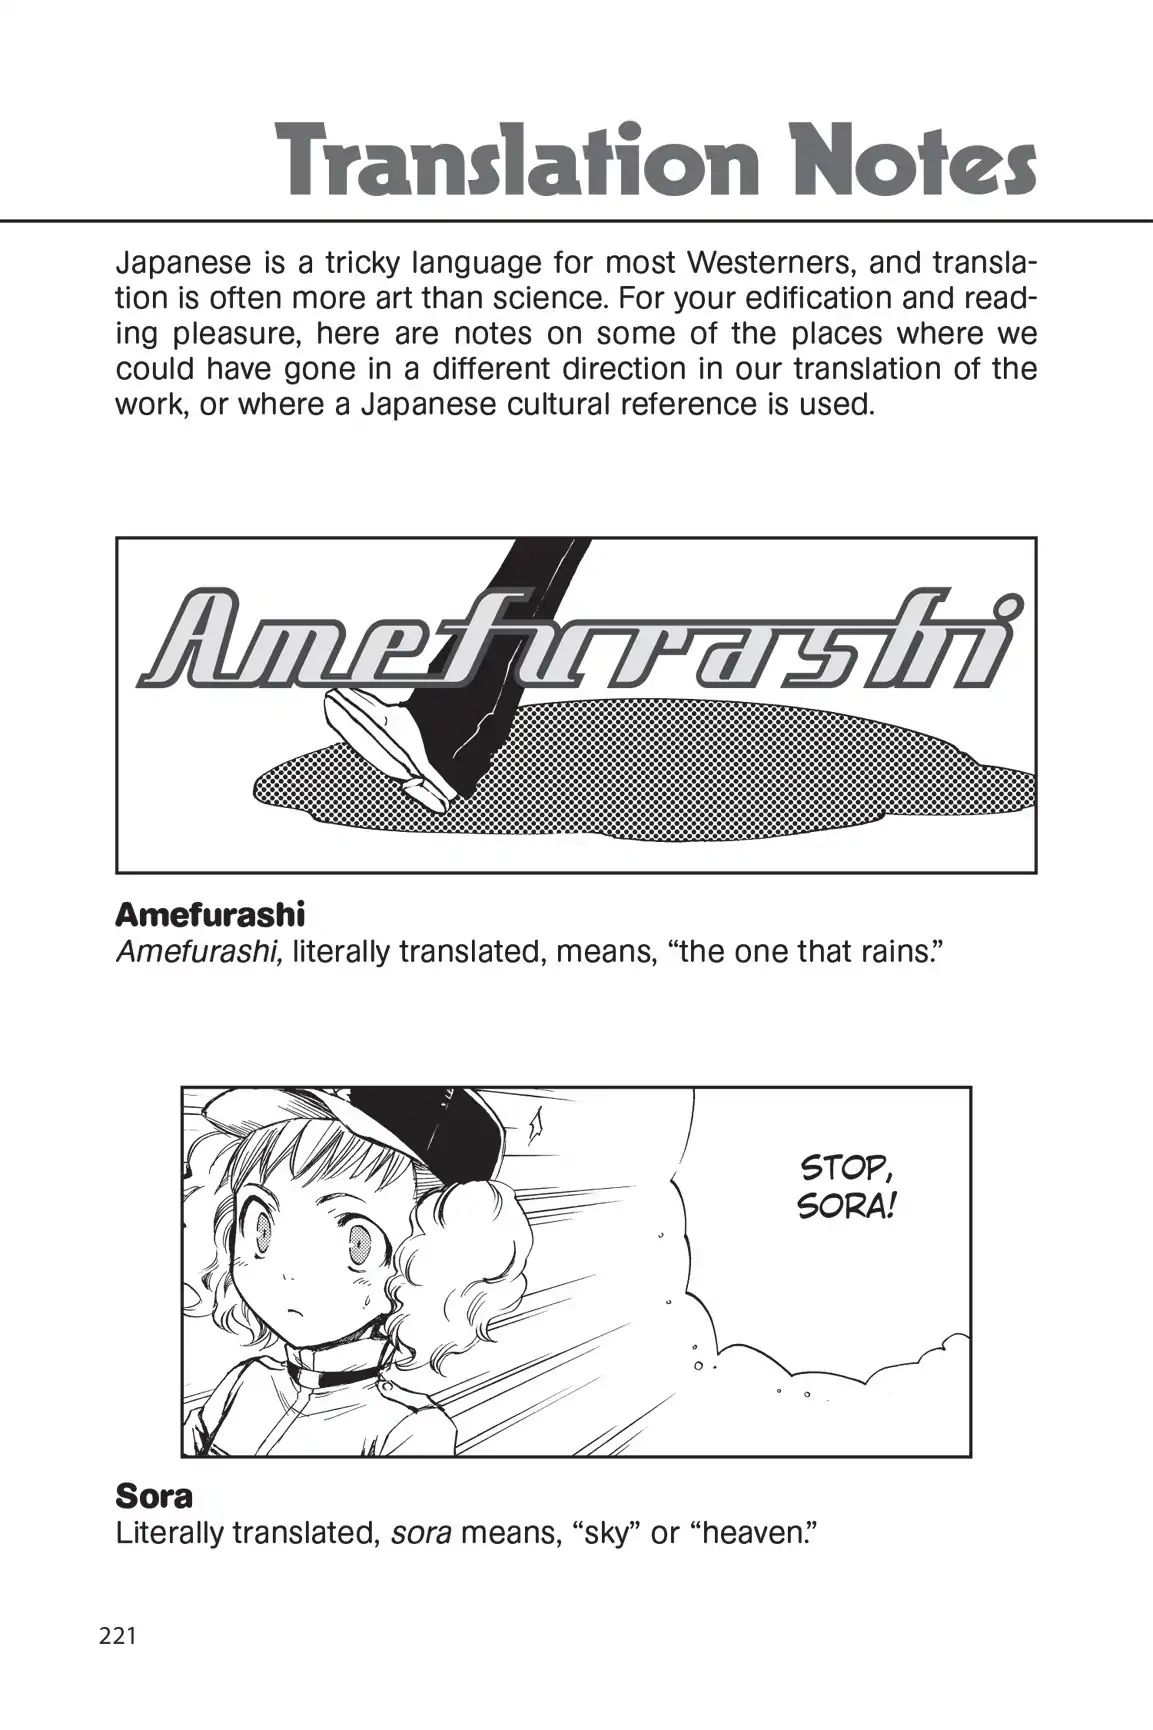 Amefurashi: The Rain Goddess - Page 1